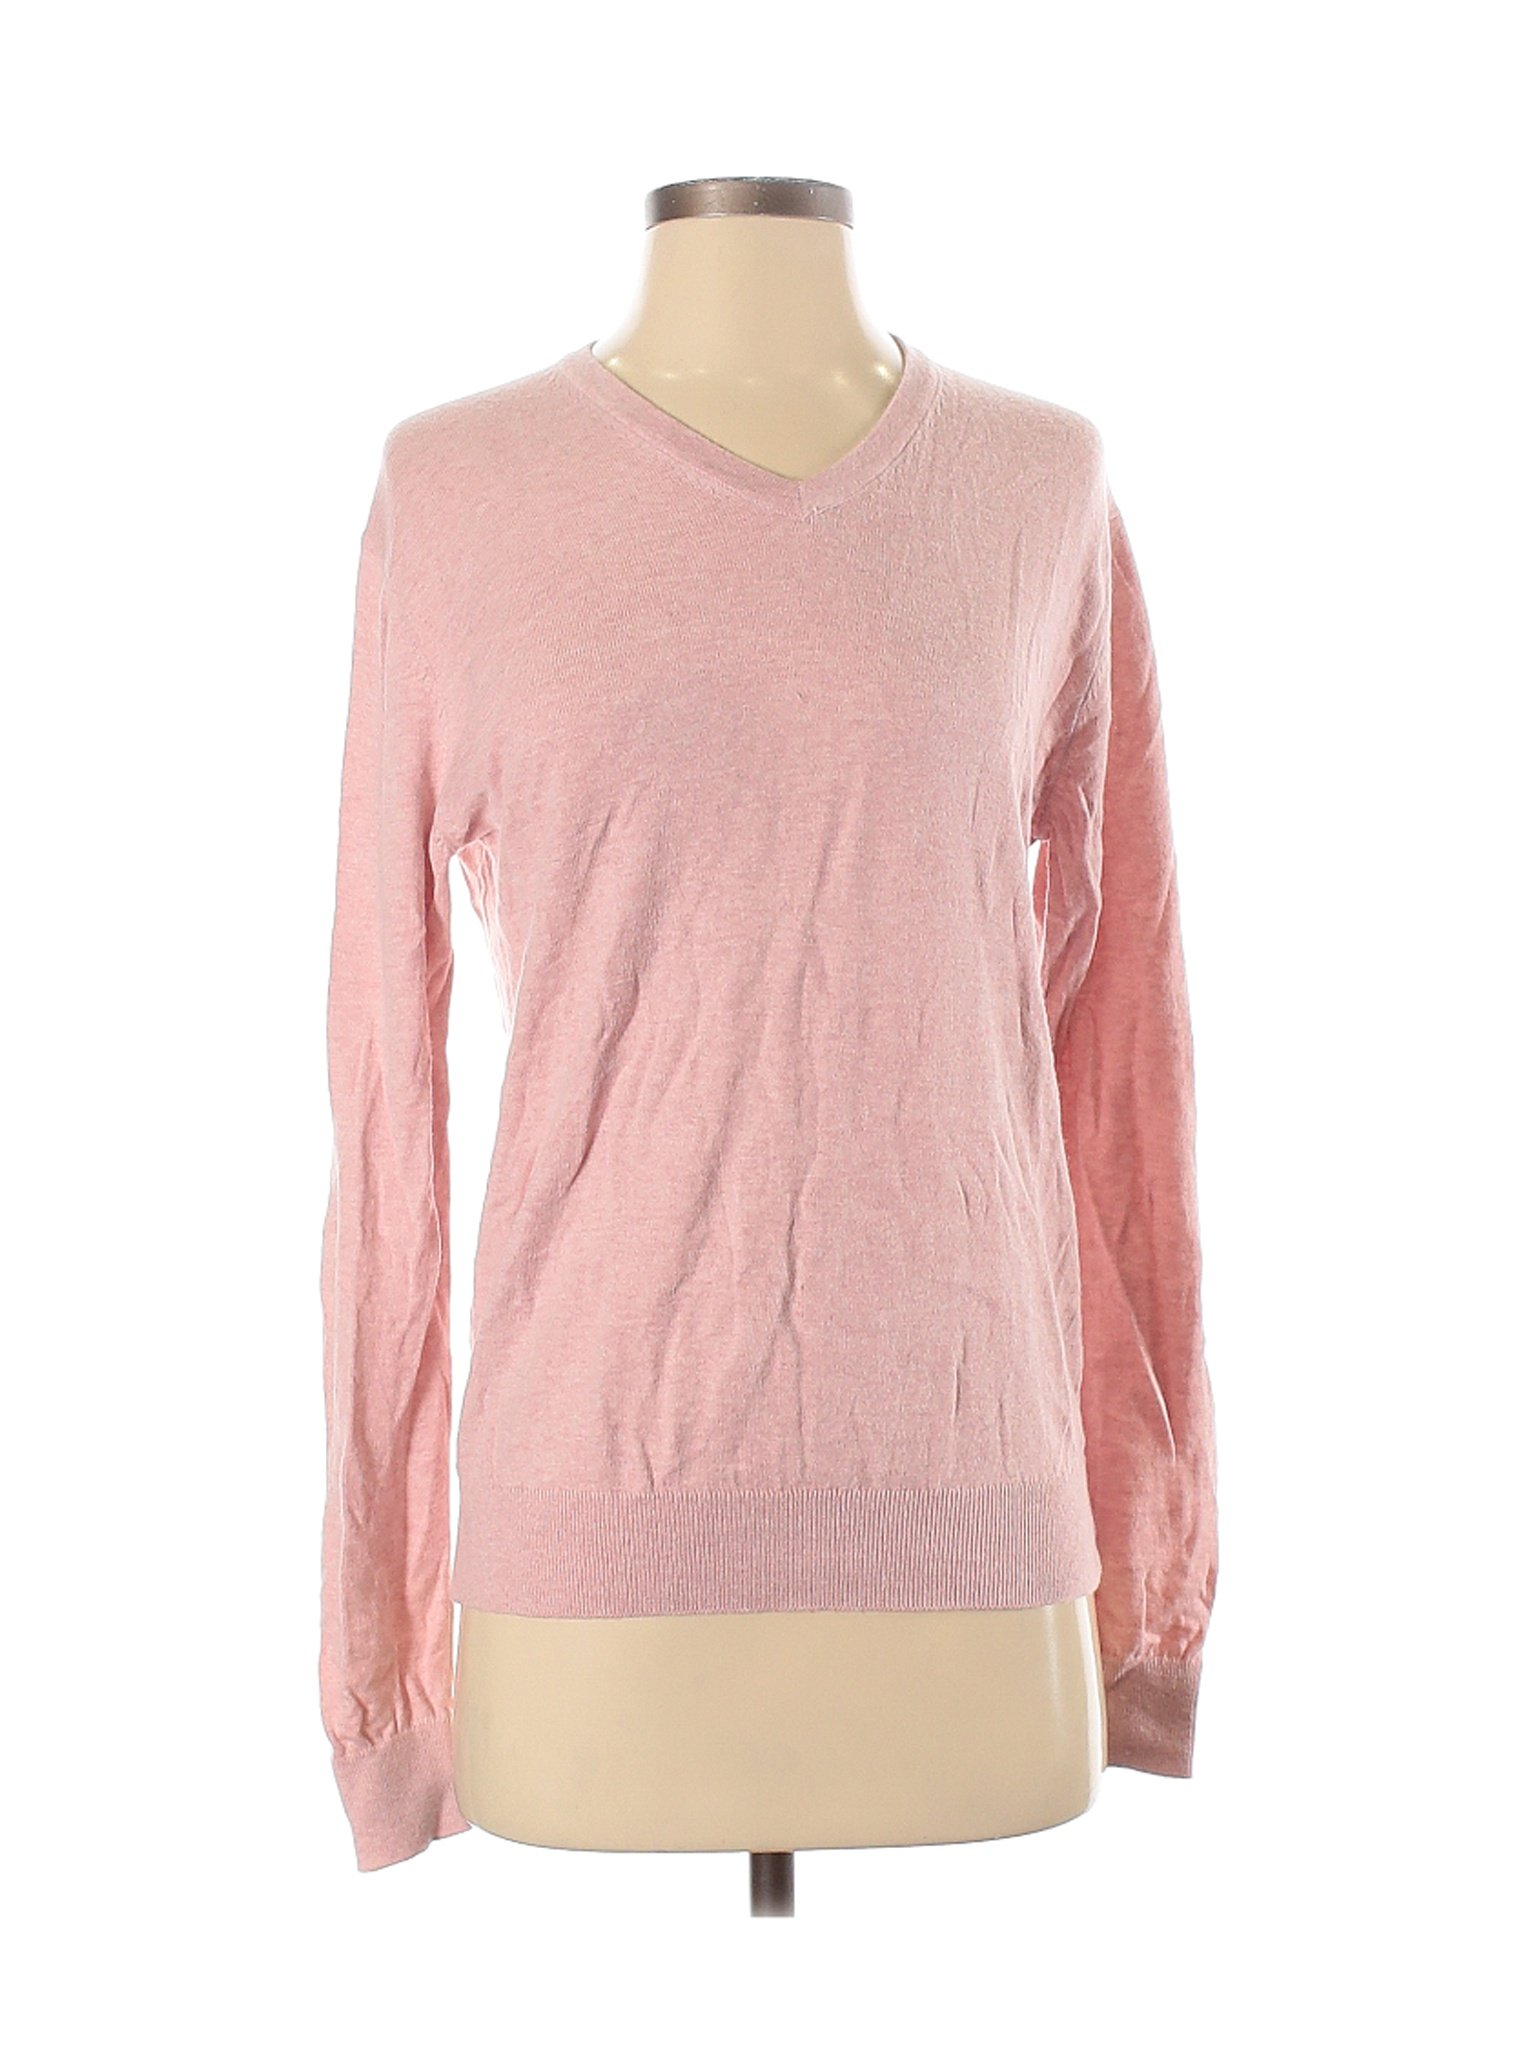 Uniqlo Women Pink Pullover Sweater XS | eBay